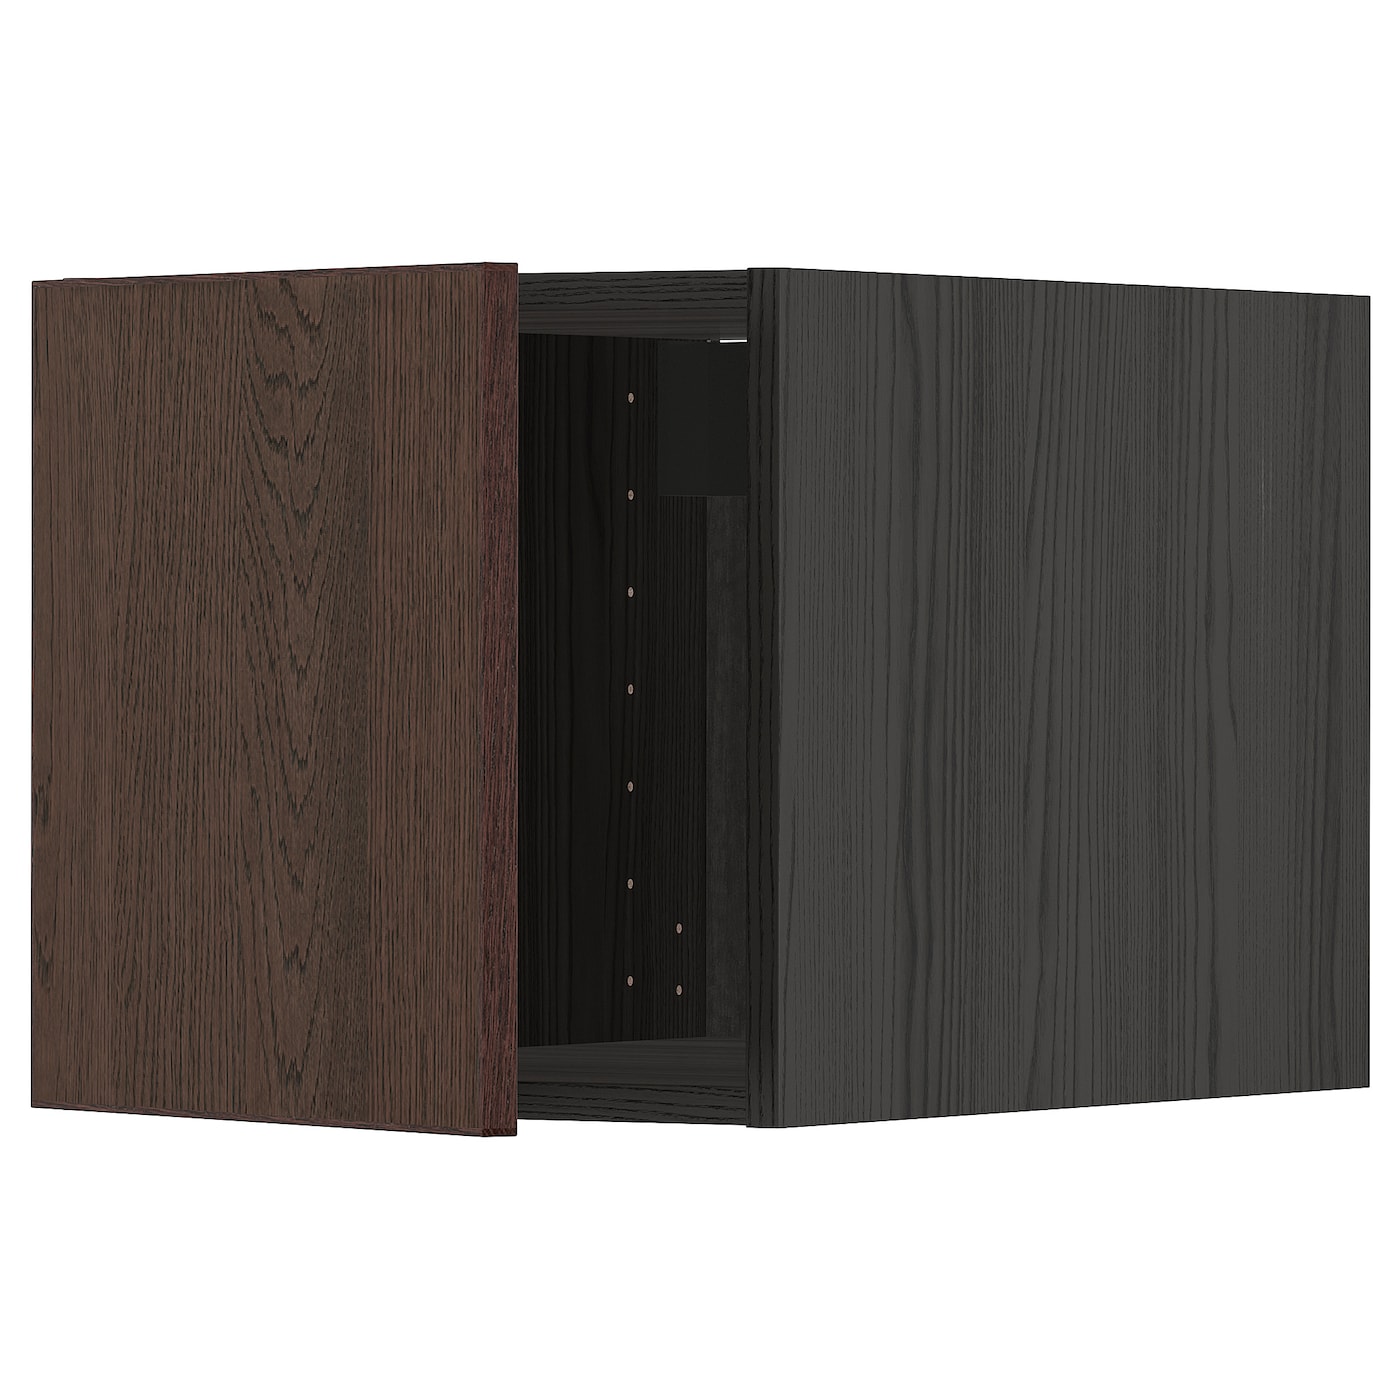 METOD Навесной шкаф - METOD IKEA/ МЕТОД ИКЕА, 40х40 см, черный/коричневый